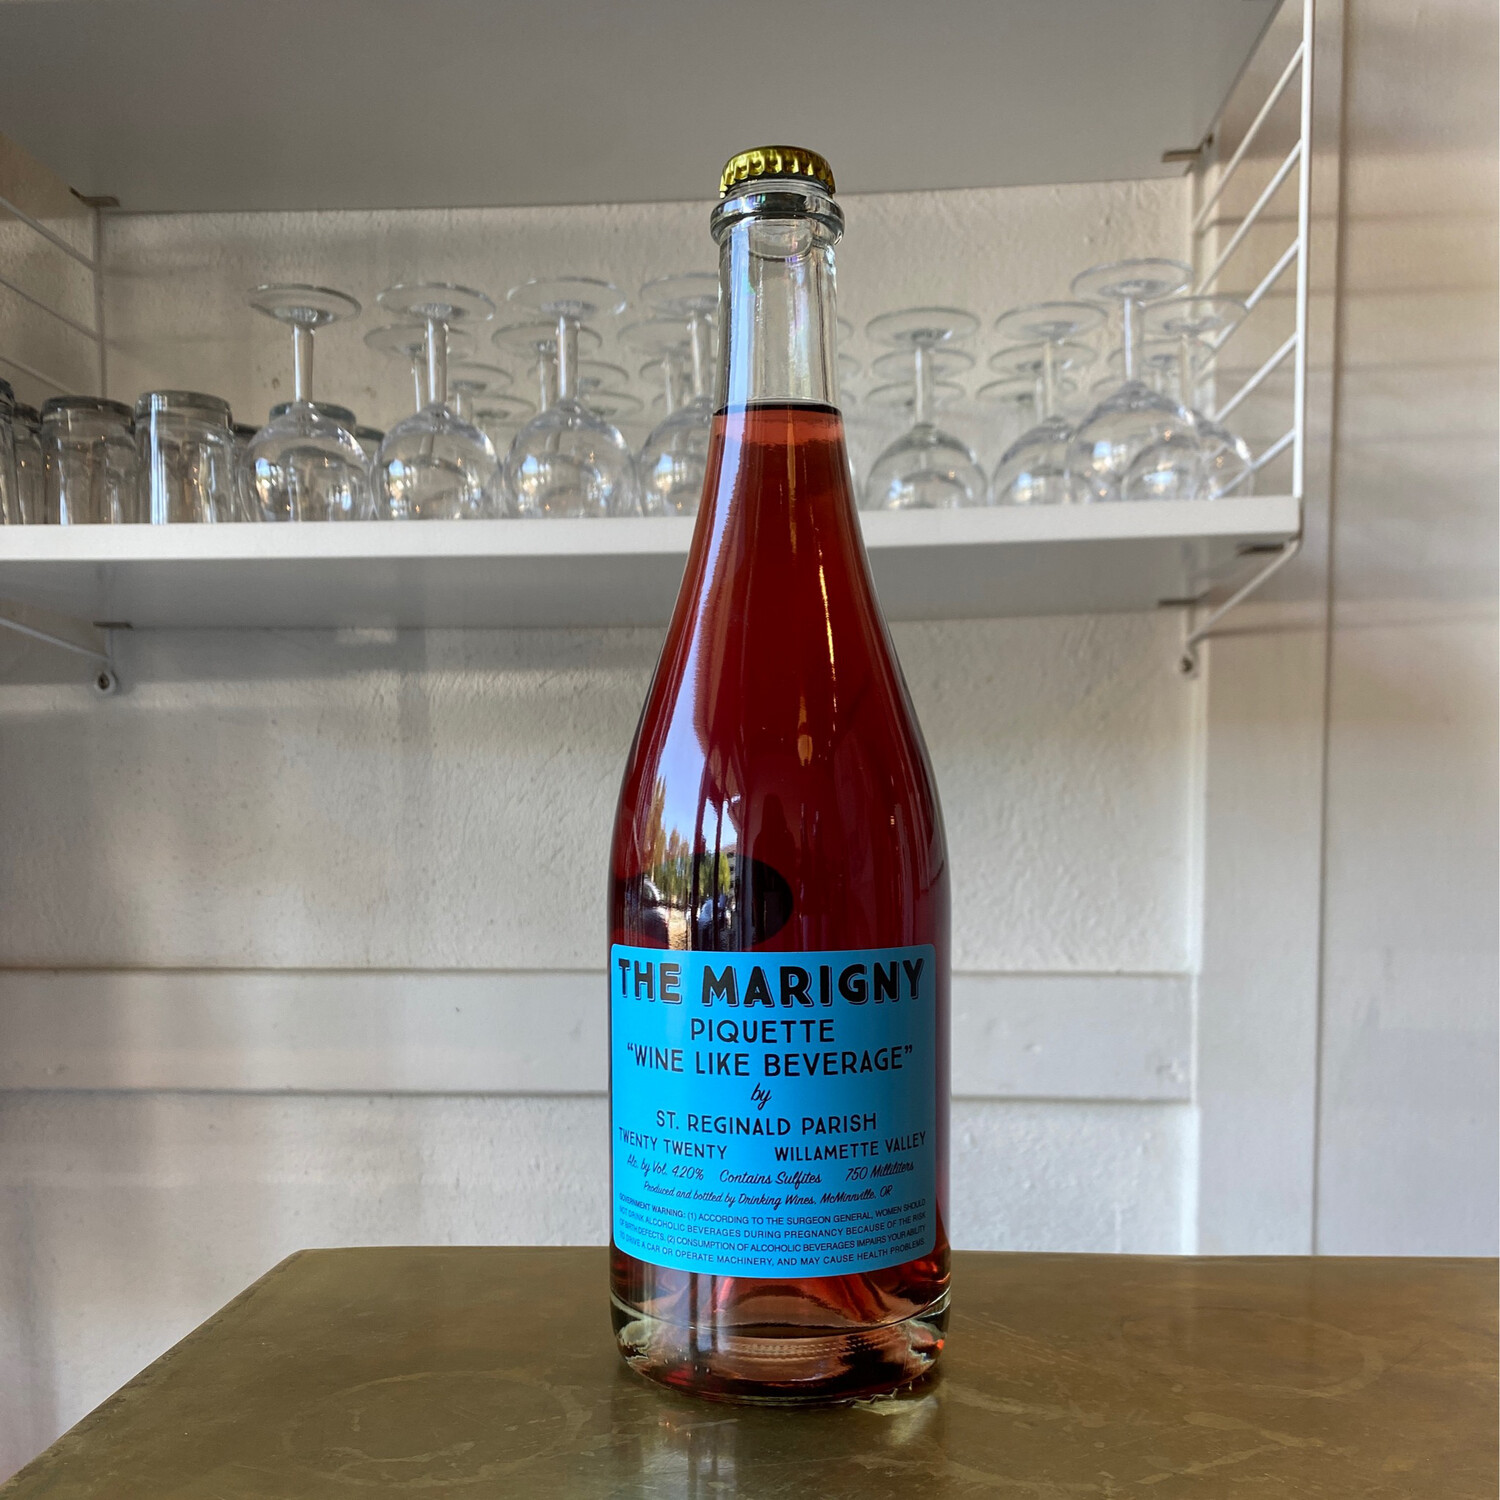 The Marigny, Piquette "Wine Like Beverage" (2020)